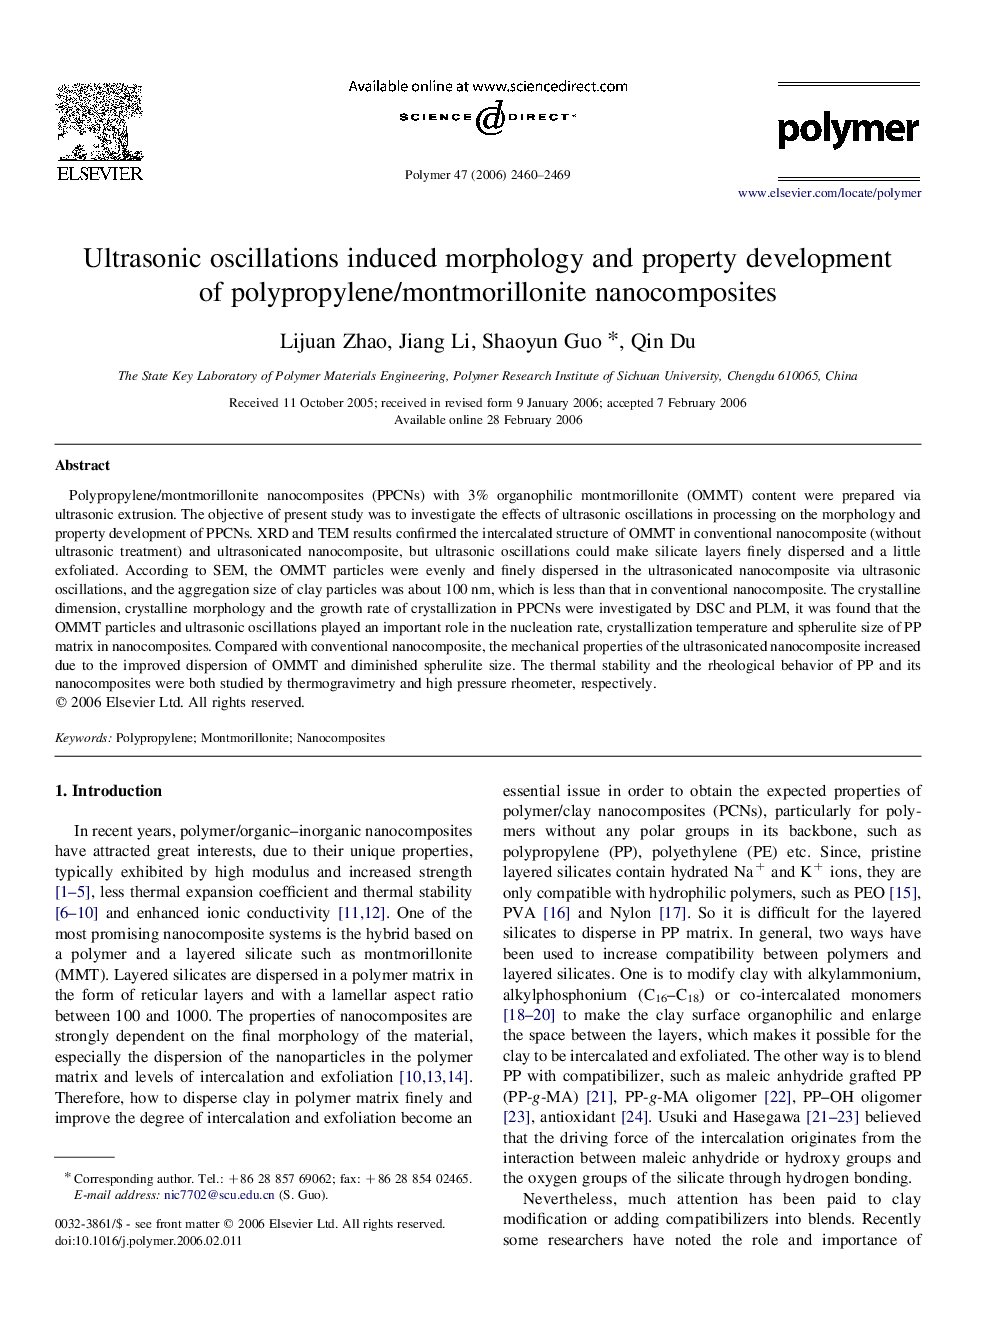 Ultrasonic oscillations induced morphology and property development of polypropylene/montmorillonite nanocomposites